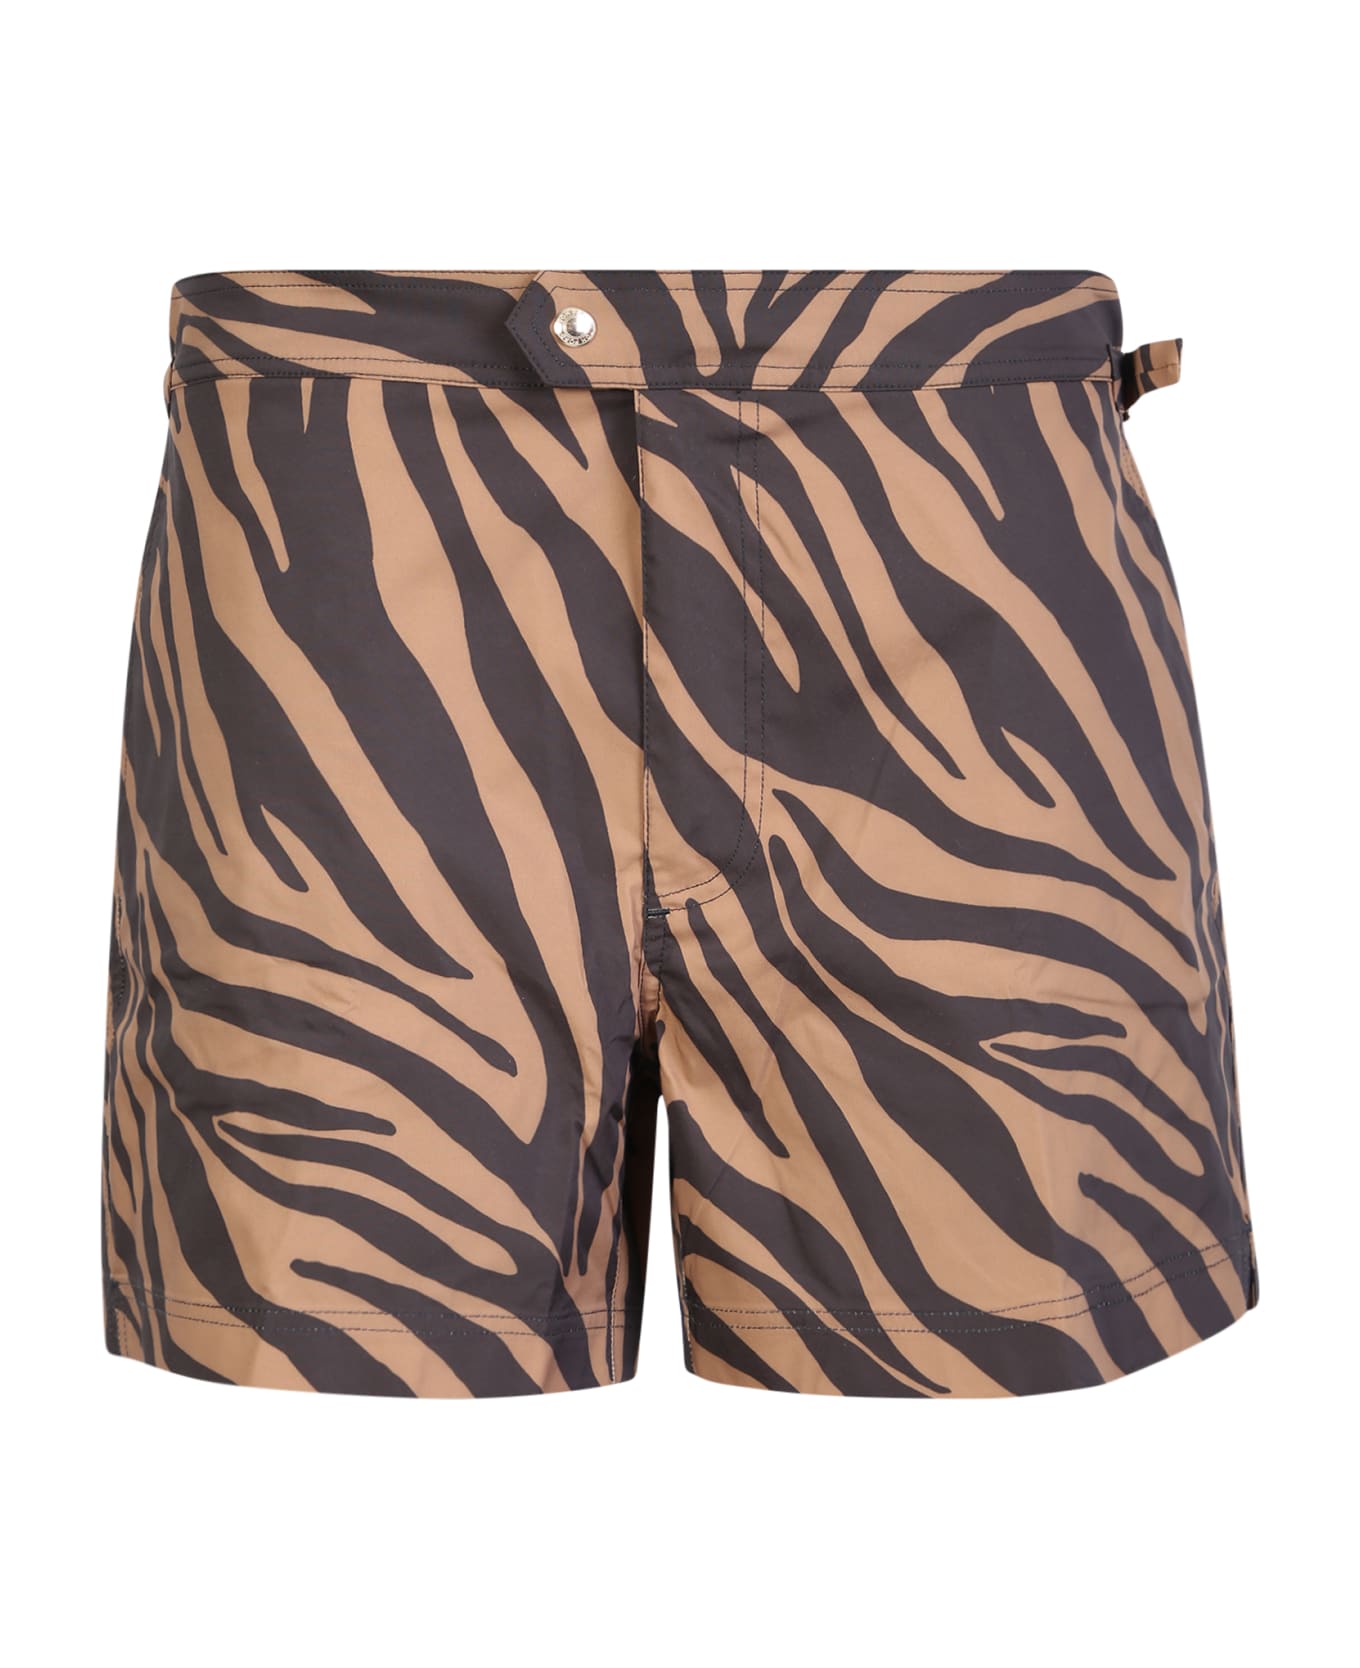 Tom Ford Zebra Print Swim Shorts - Beige